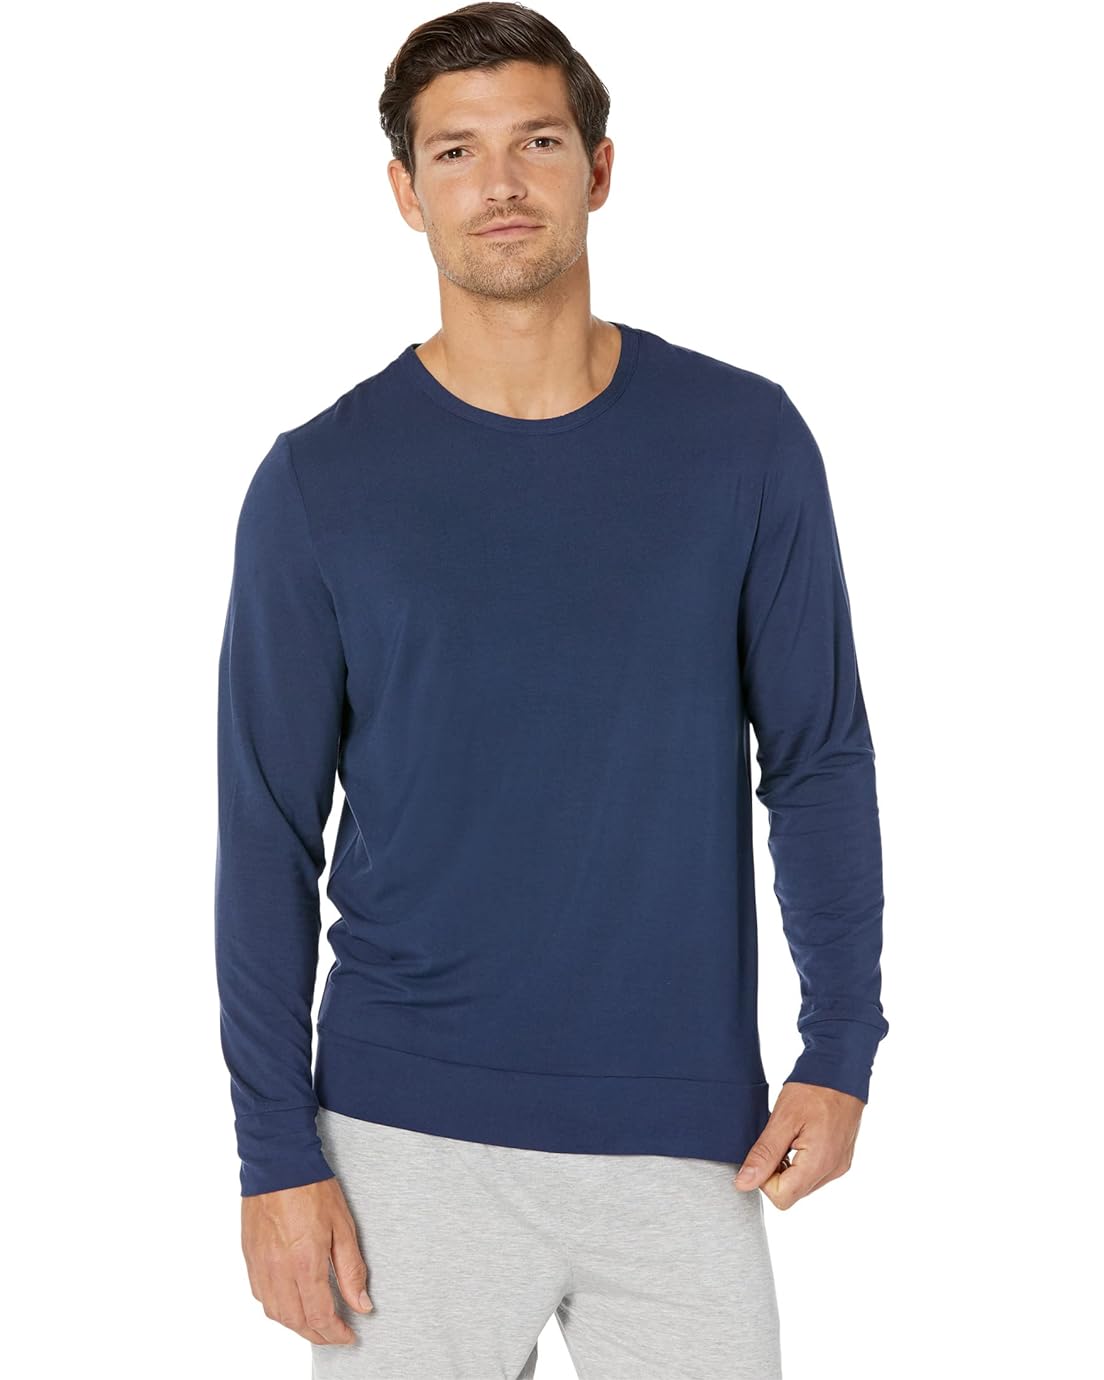 Calvin Klein Underwear Eco Pure Modal Lounge Long Sleeve Sweatshirt